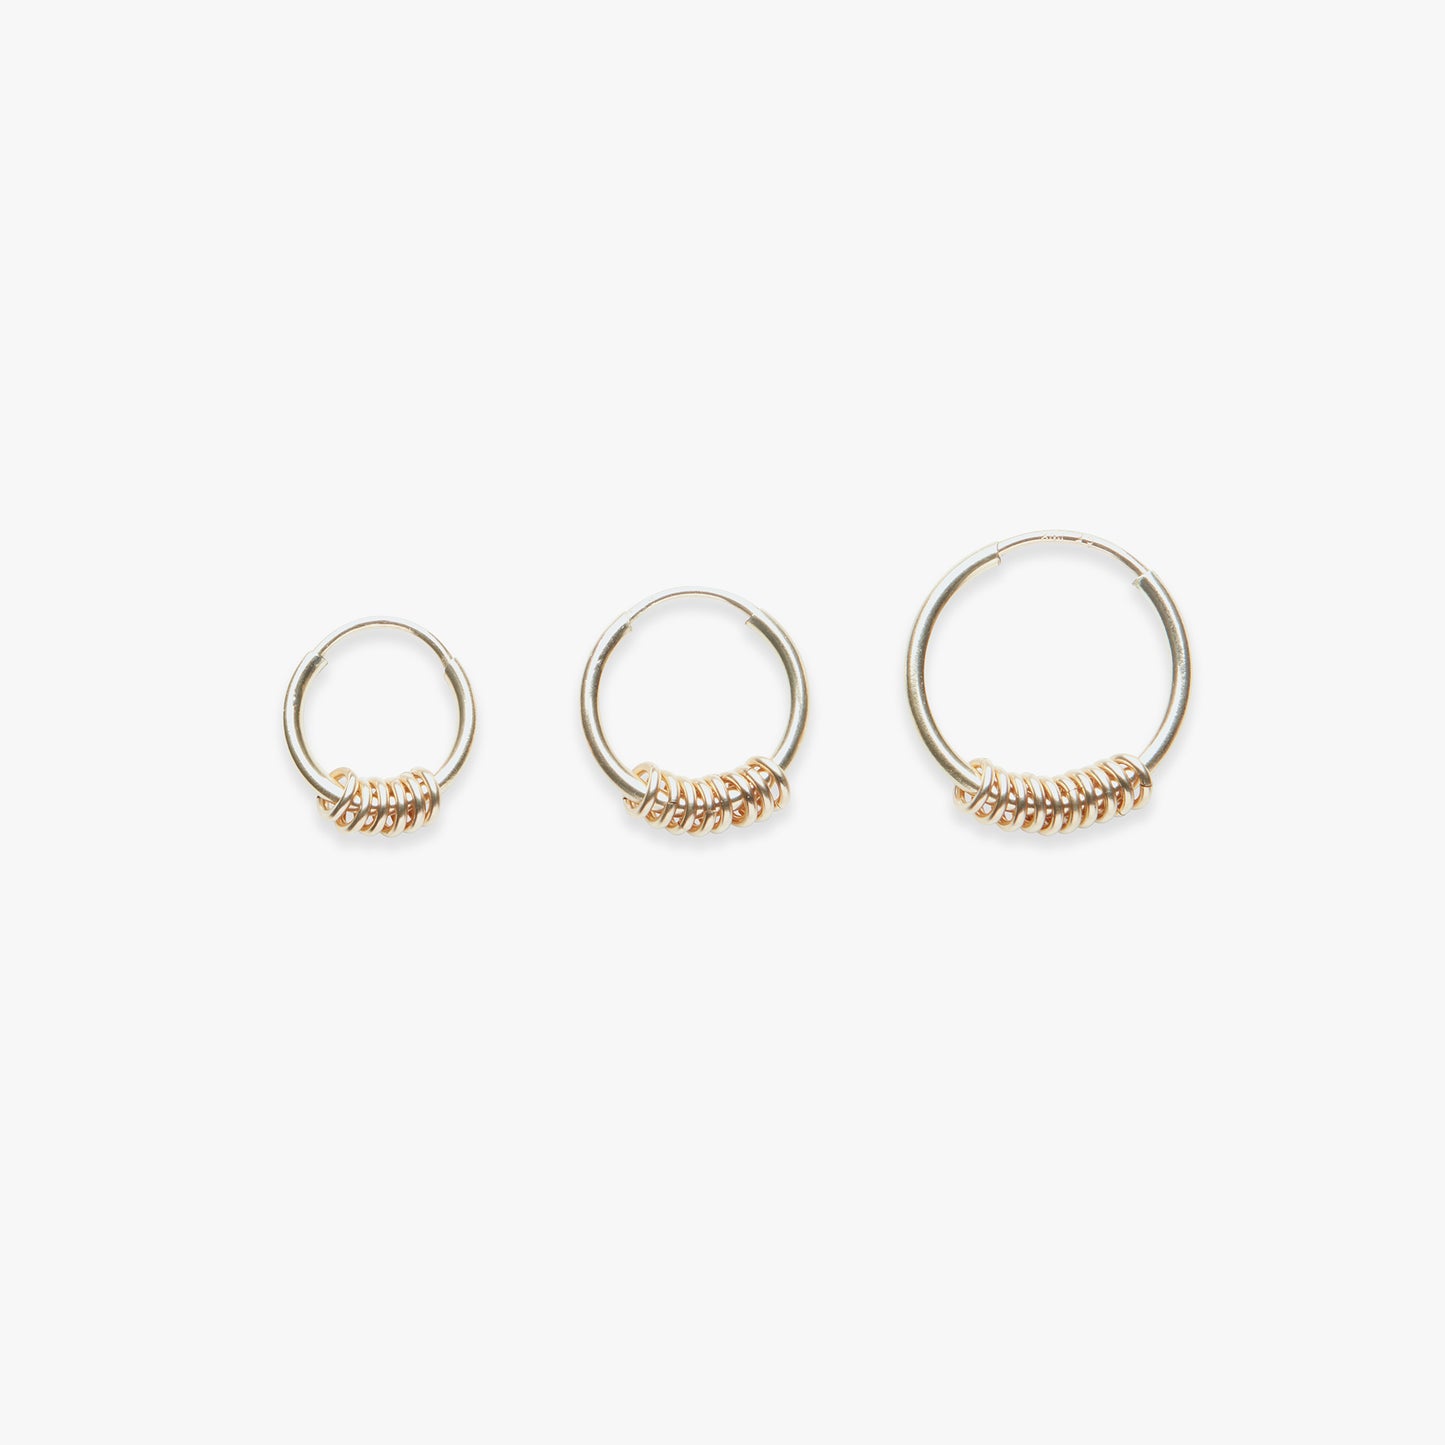 Gold Earrings Rings with Zircons | JewelryAndGems.eu